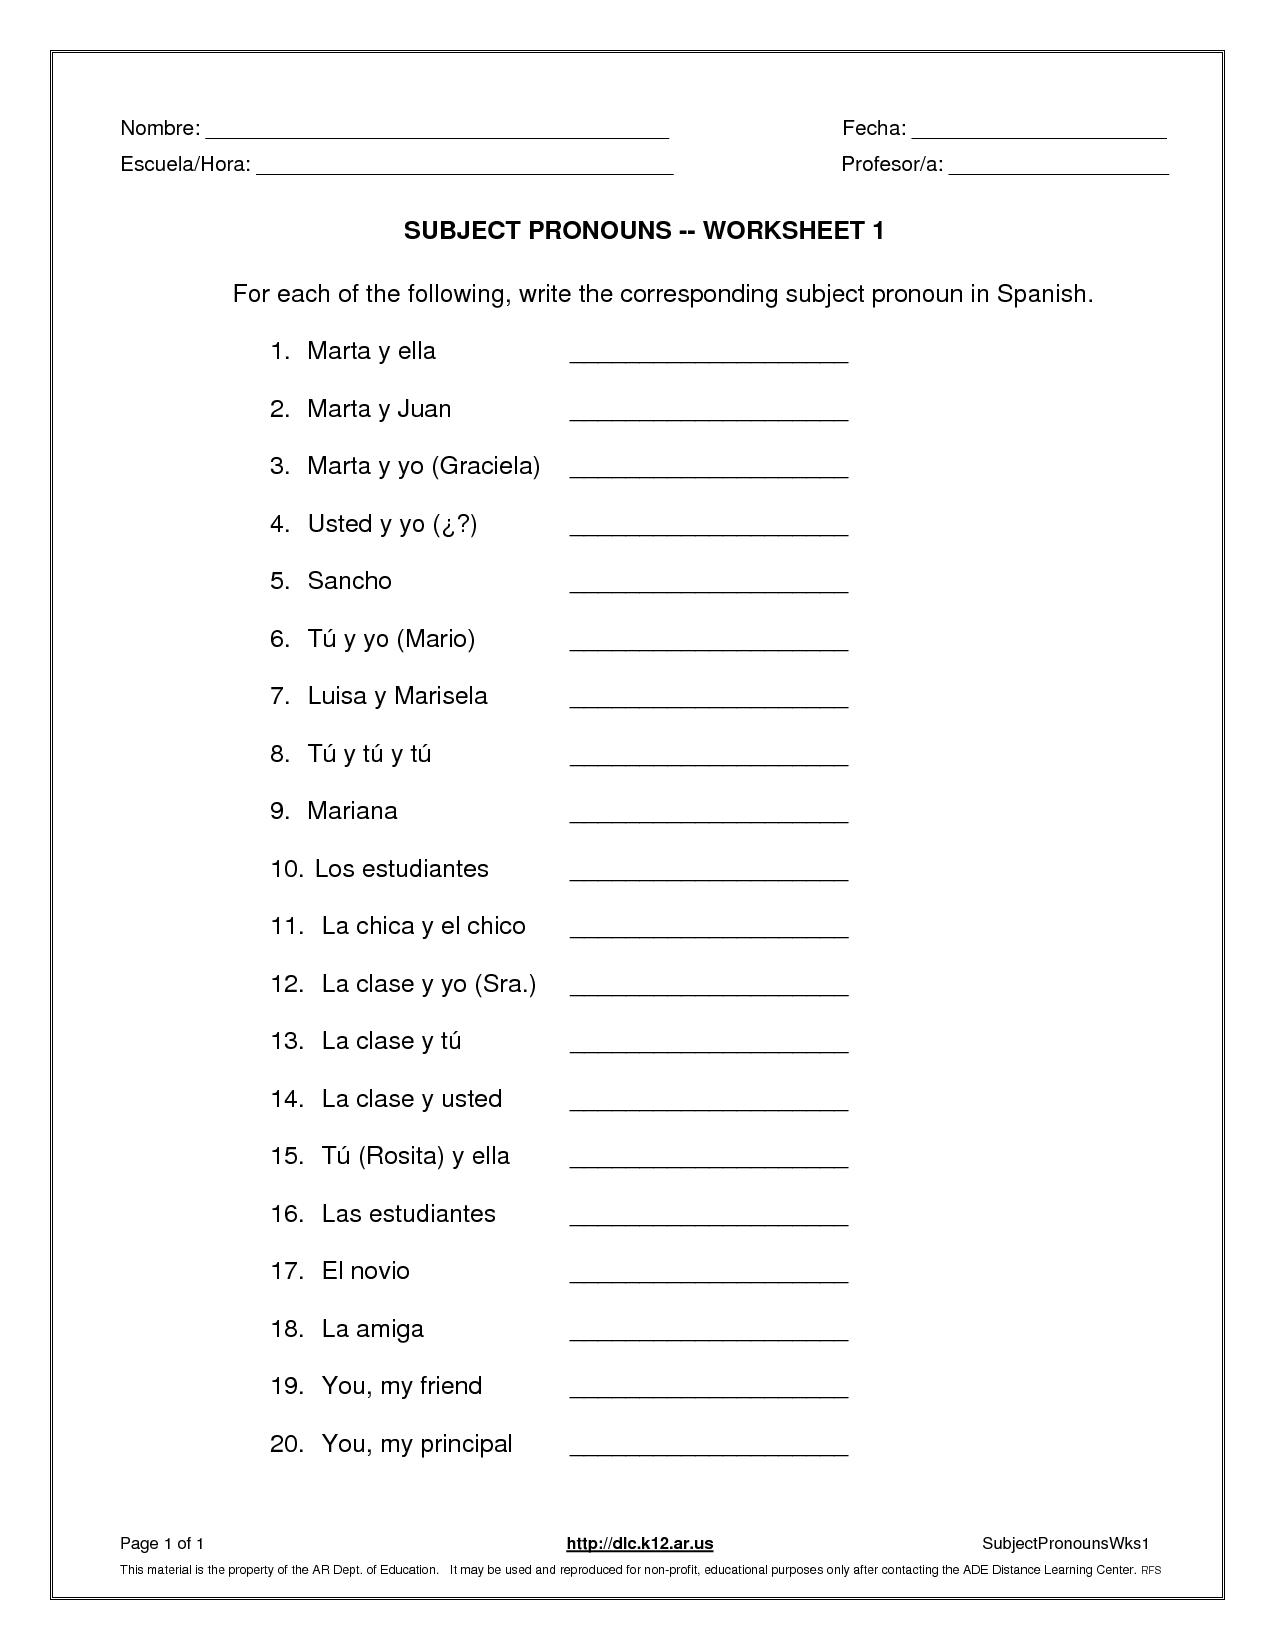 Subject Pronouns Worksheets Image